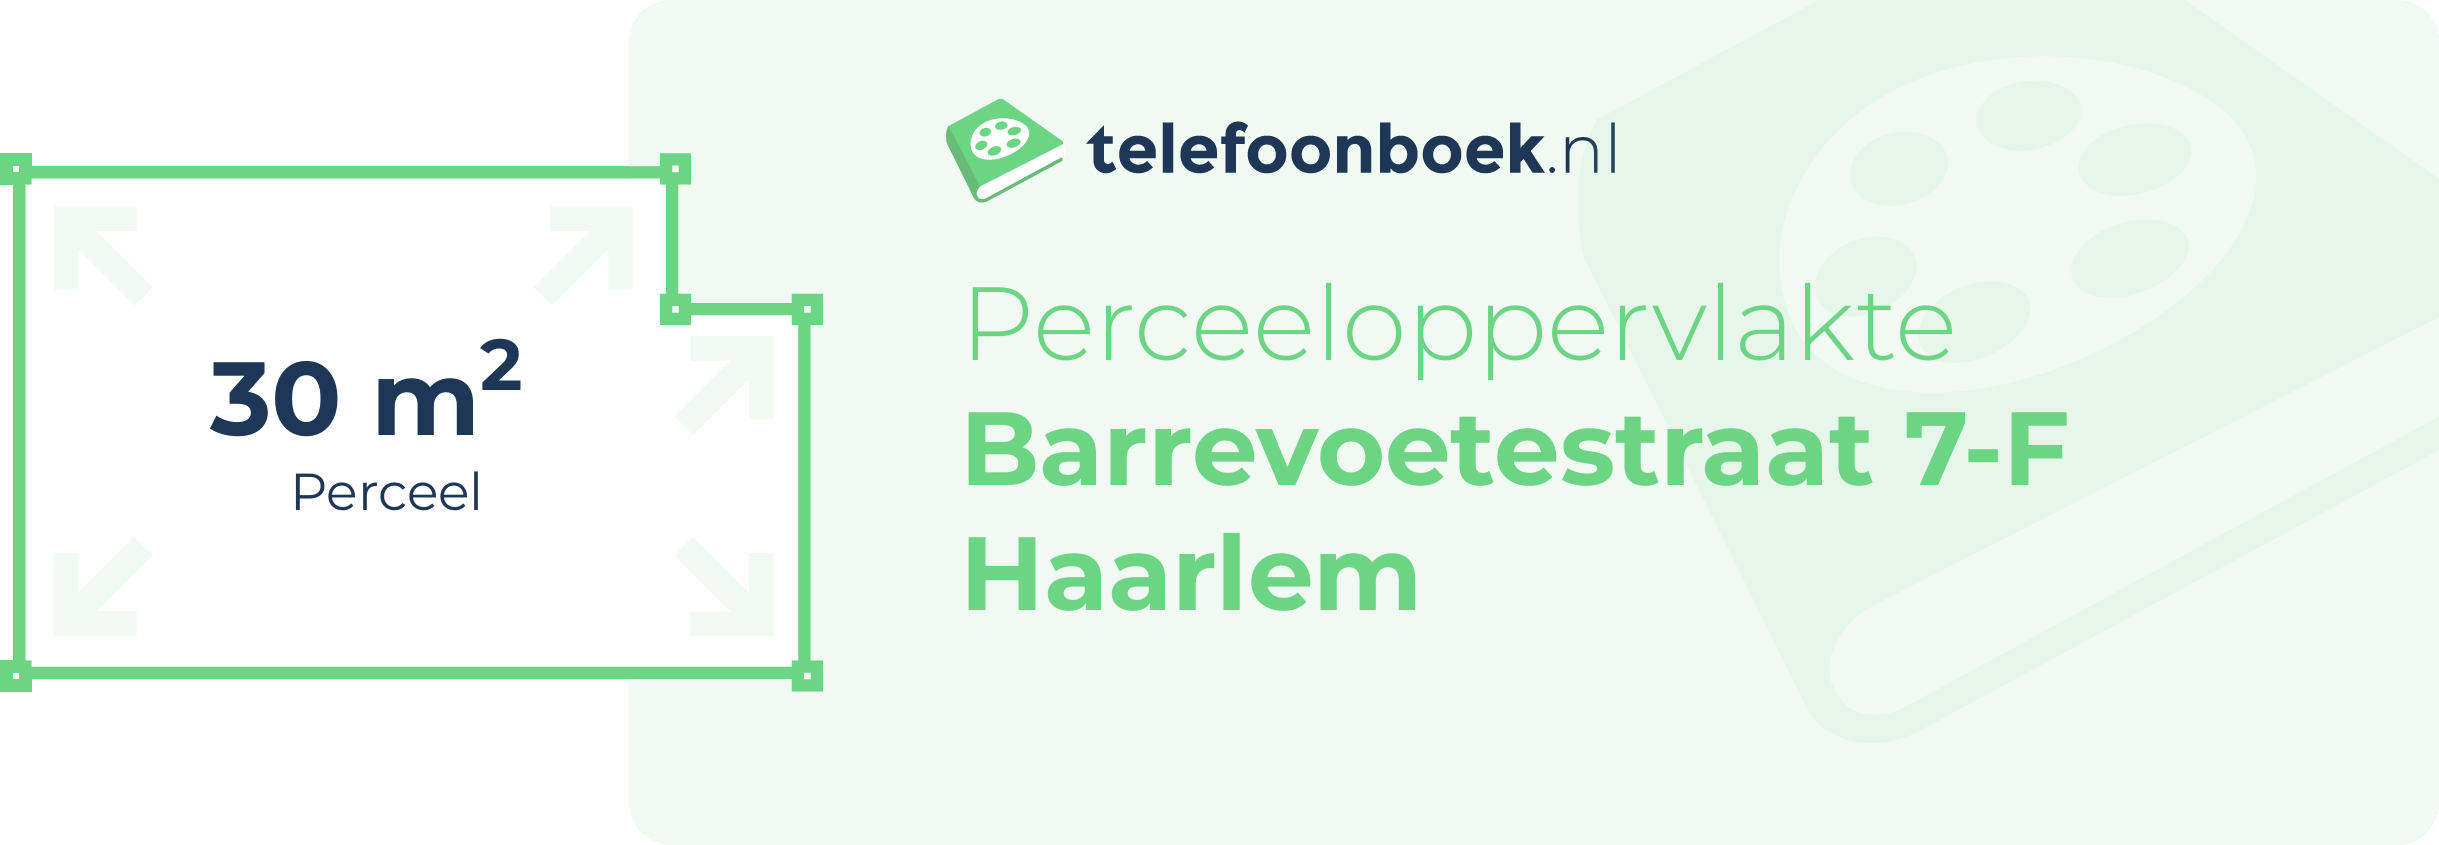 Perceeloppervlakte Barrevoetestraat 7-F Haarlem